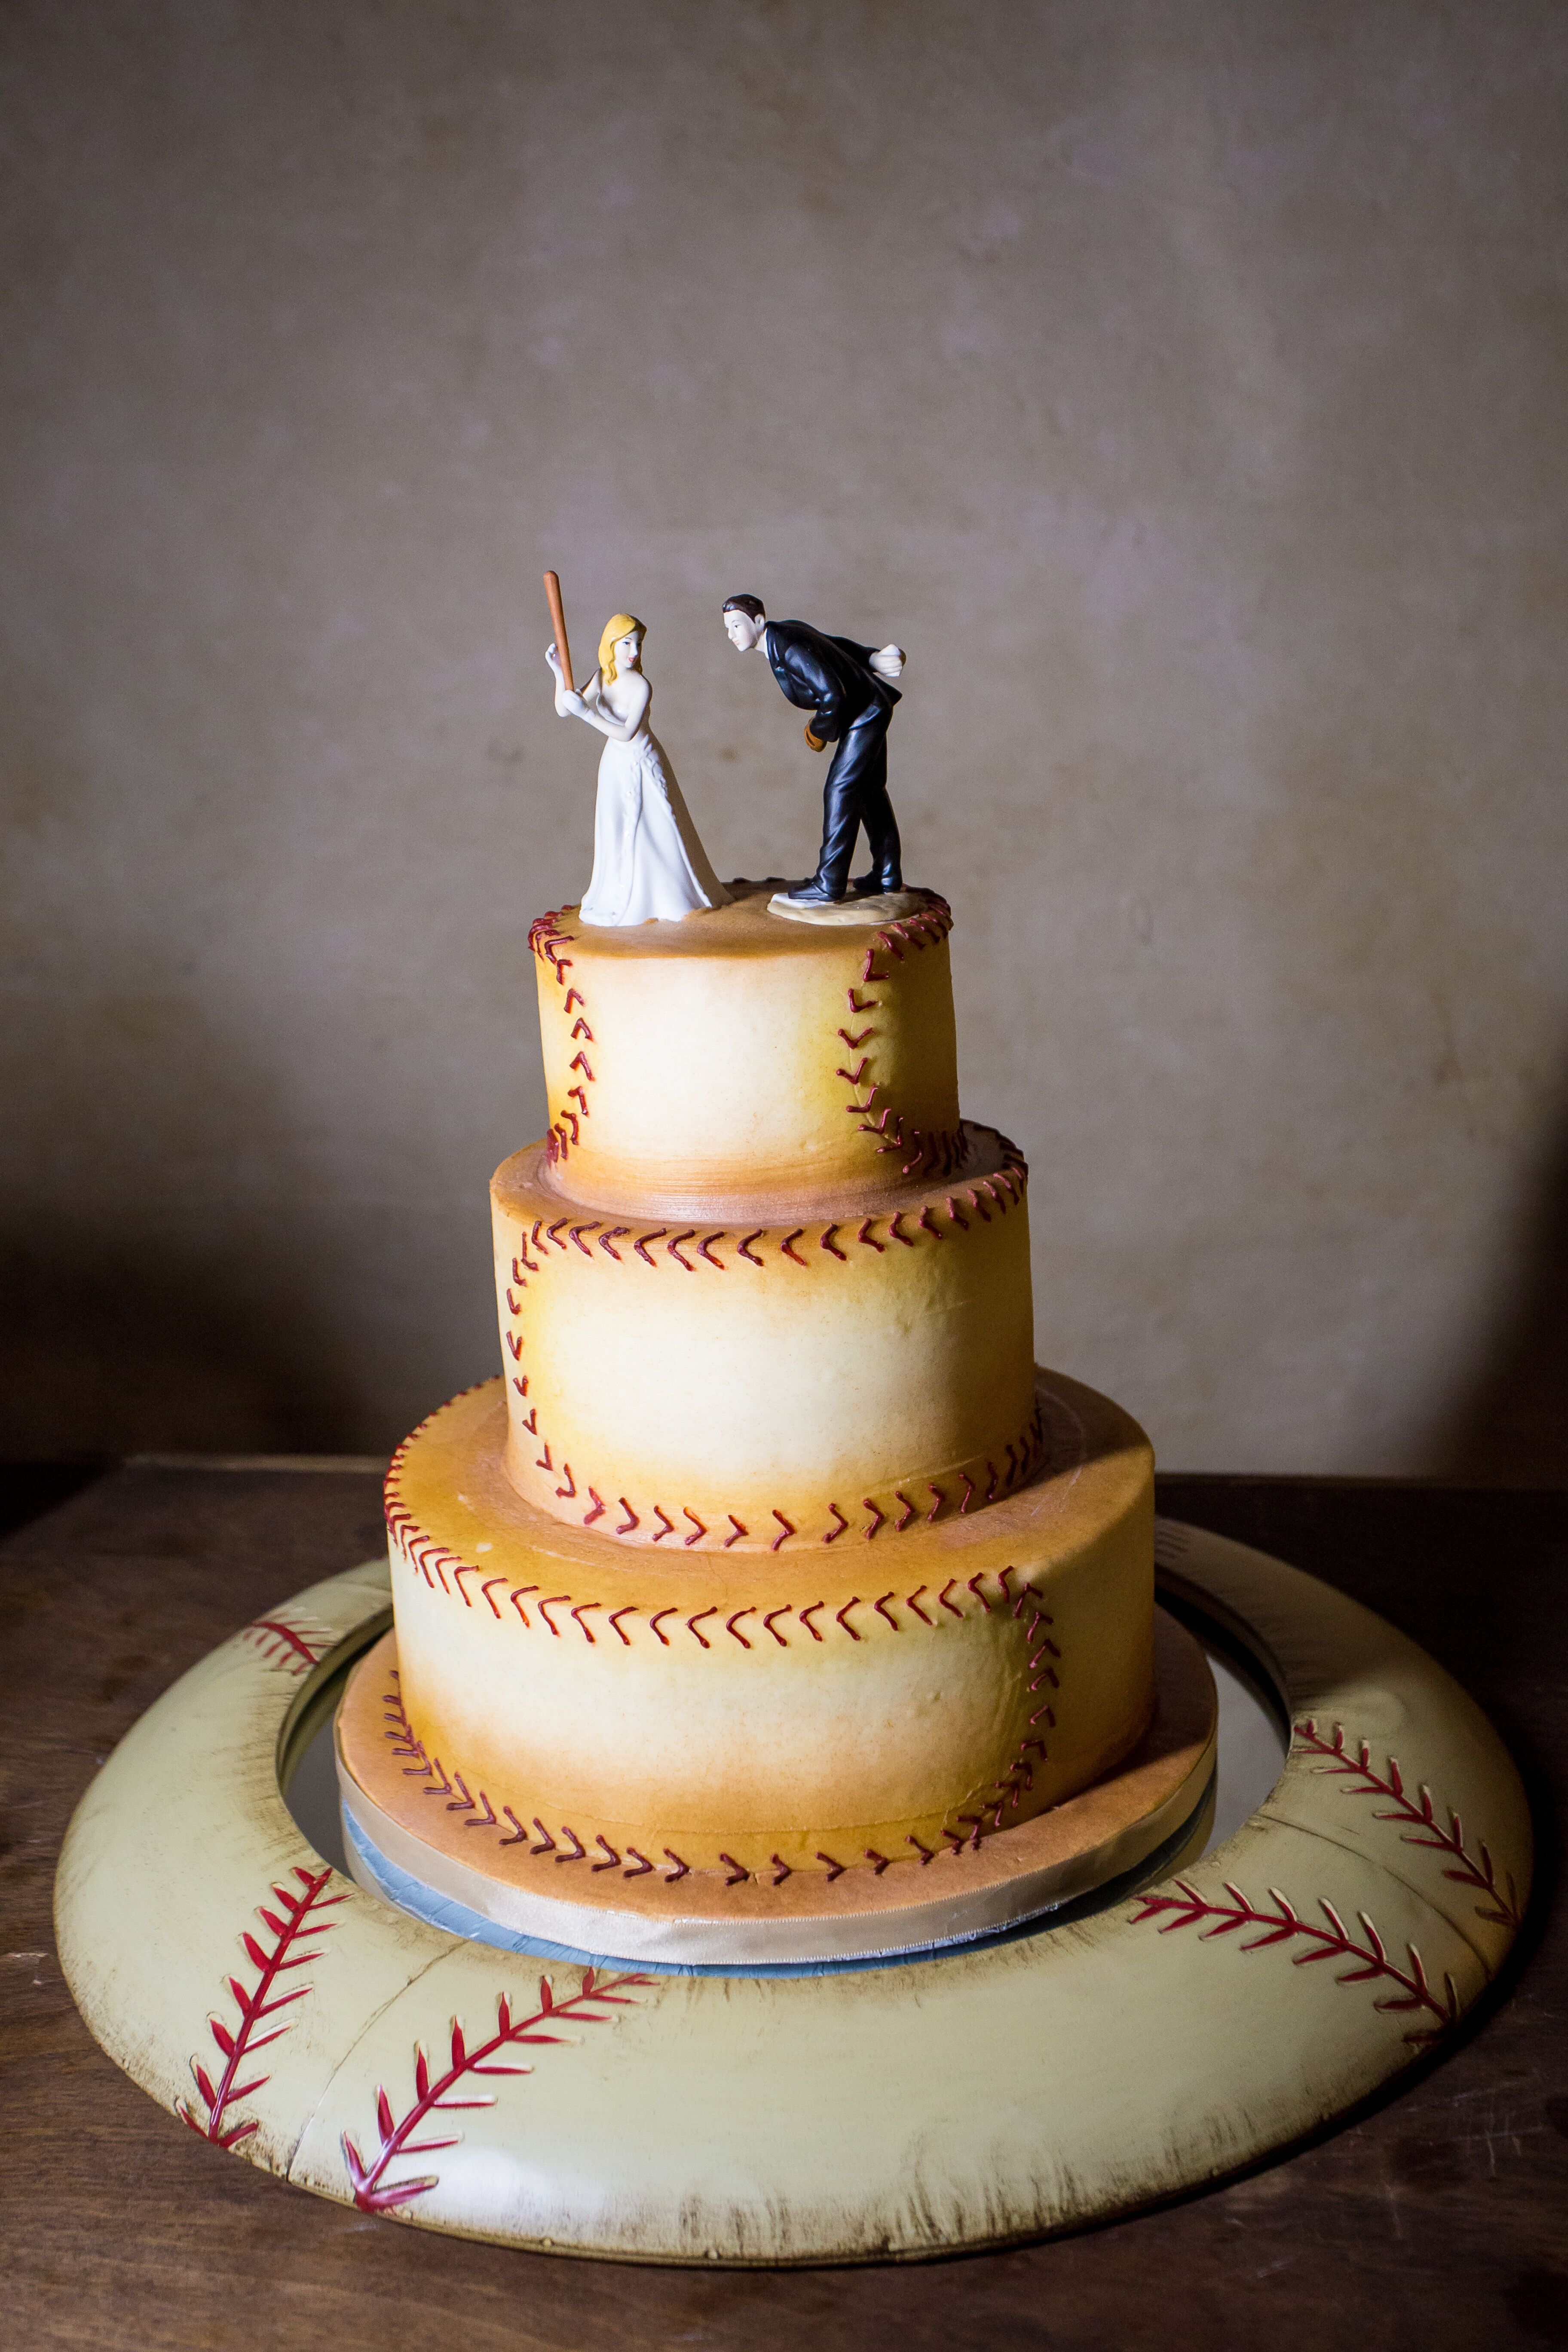 Sports Themed Weddings - Baseball Themed Wedding Cake Ideas